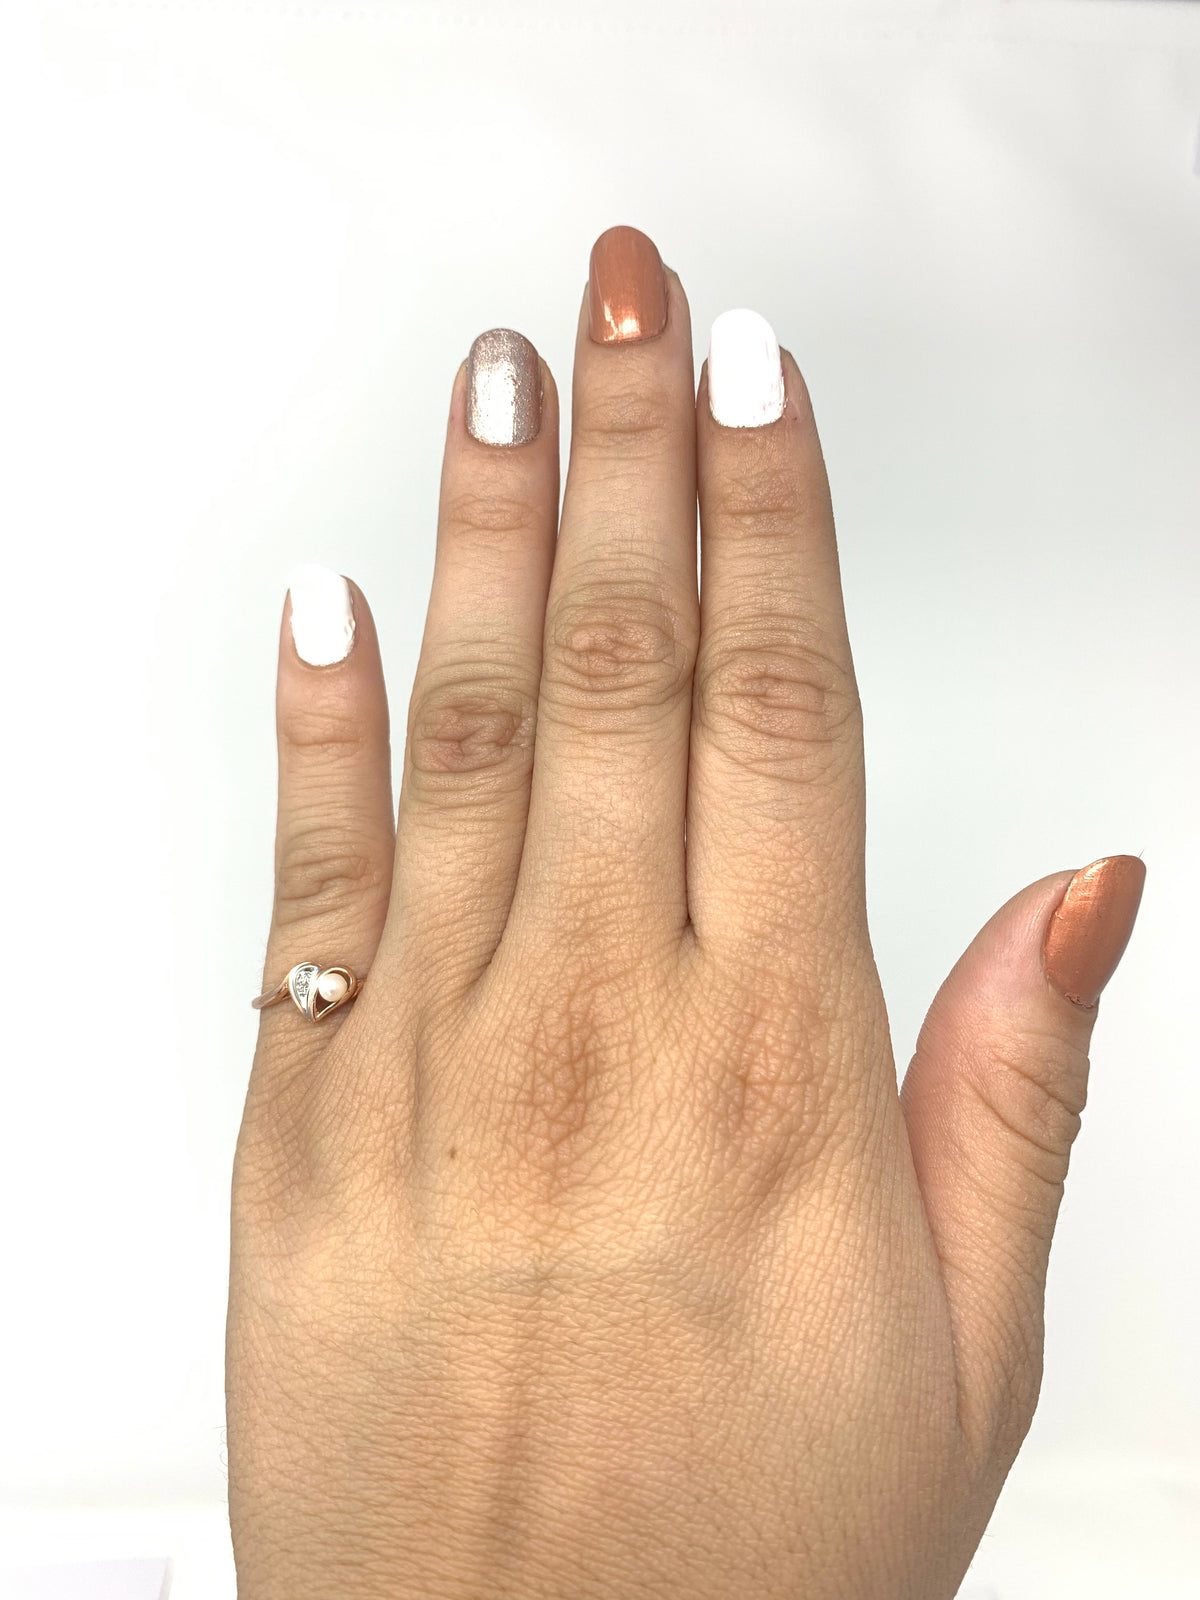 Pearl &amp; Diamond Ring